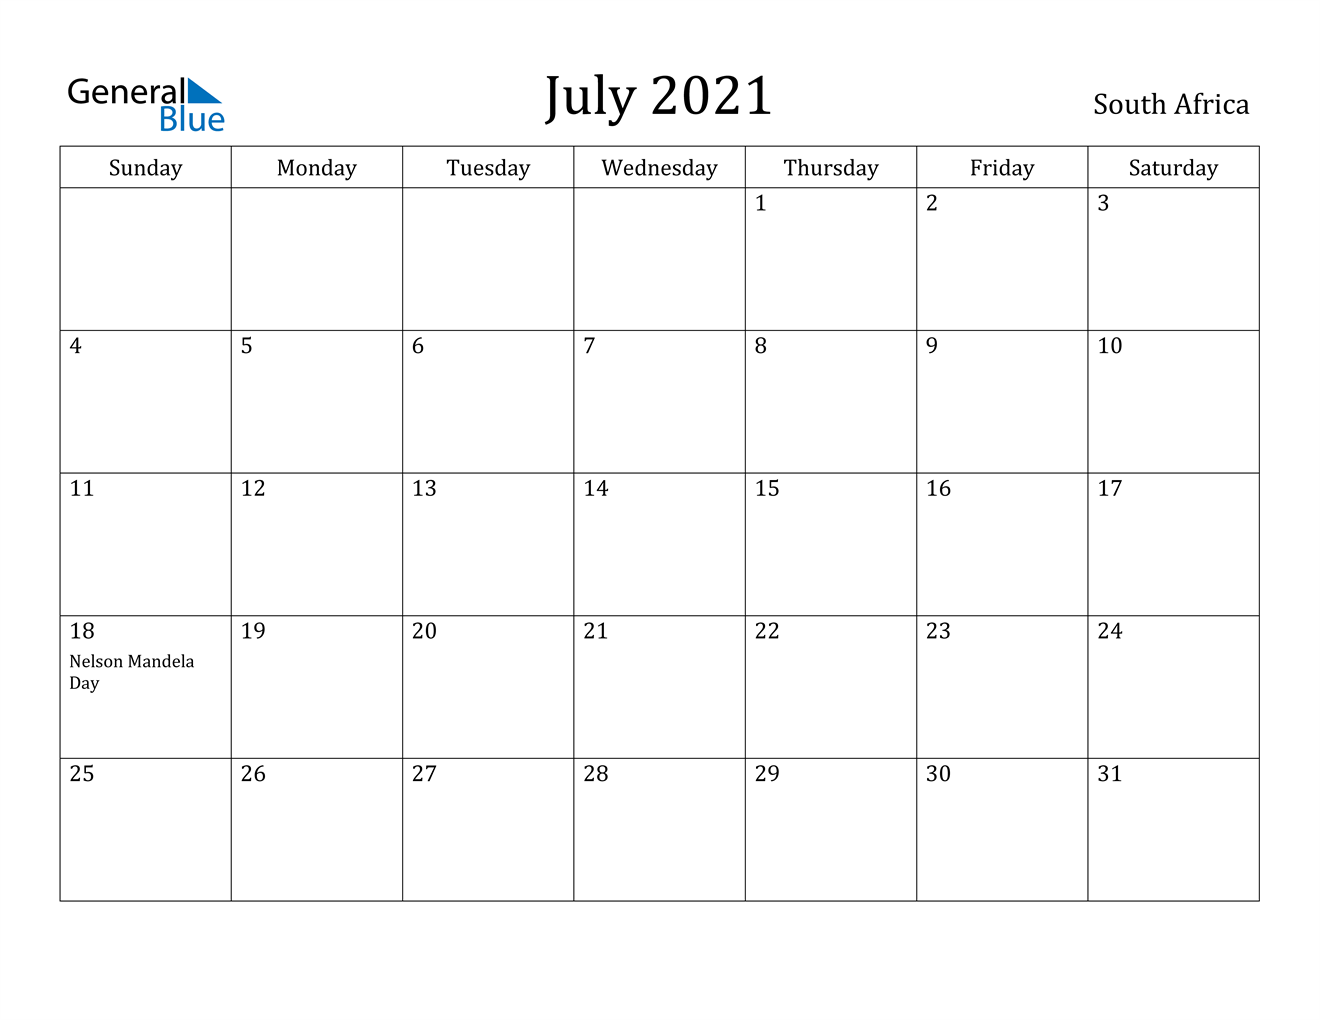 July 2021 Calendar - South Africa